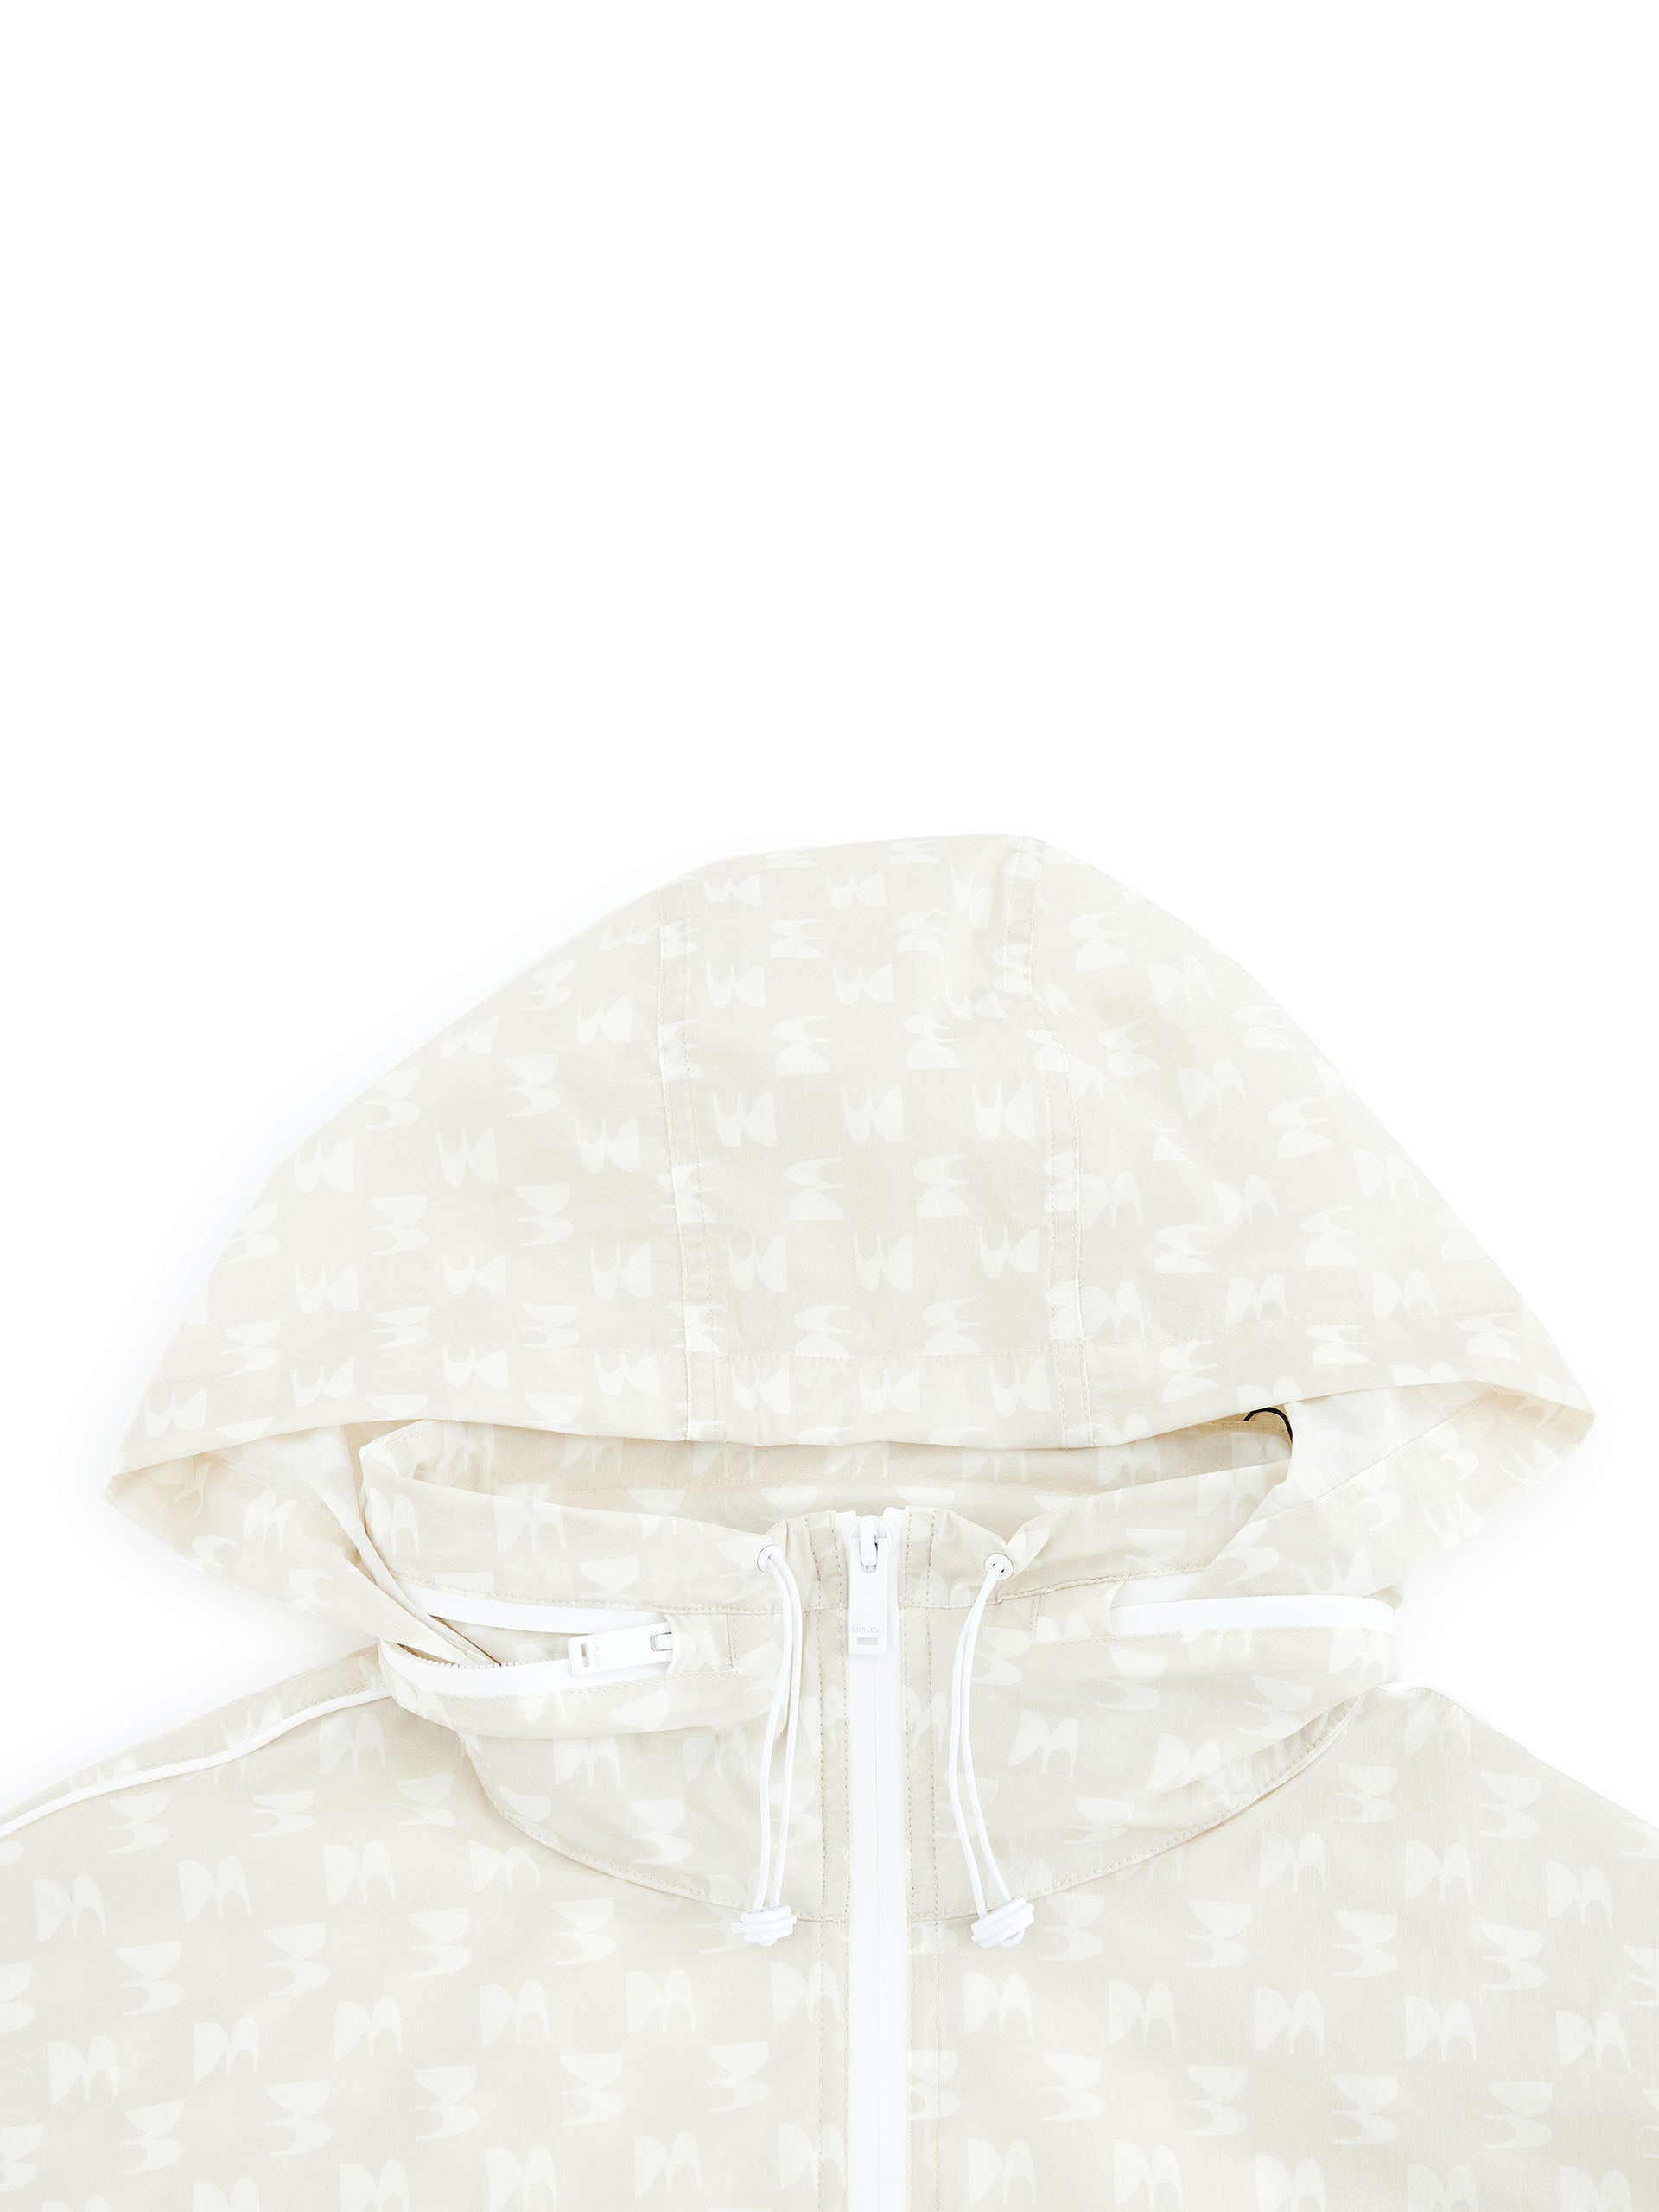 Louis Vuitton Hooded Monogram-print Woven Jacket in White for Men